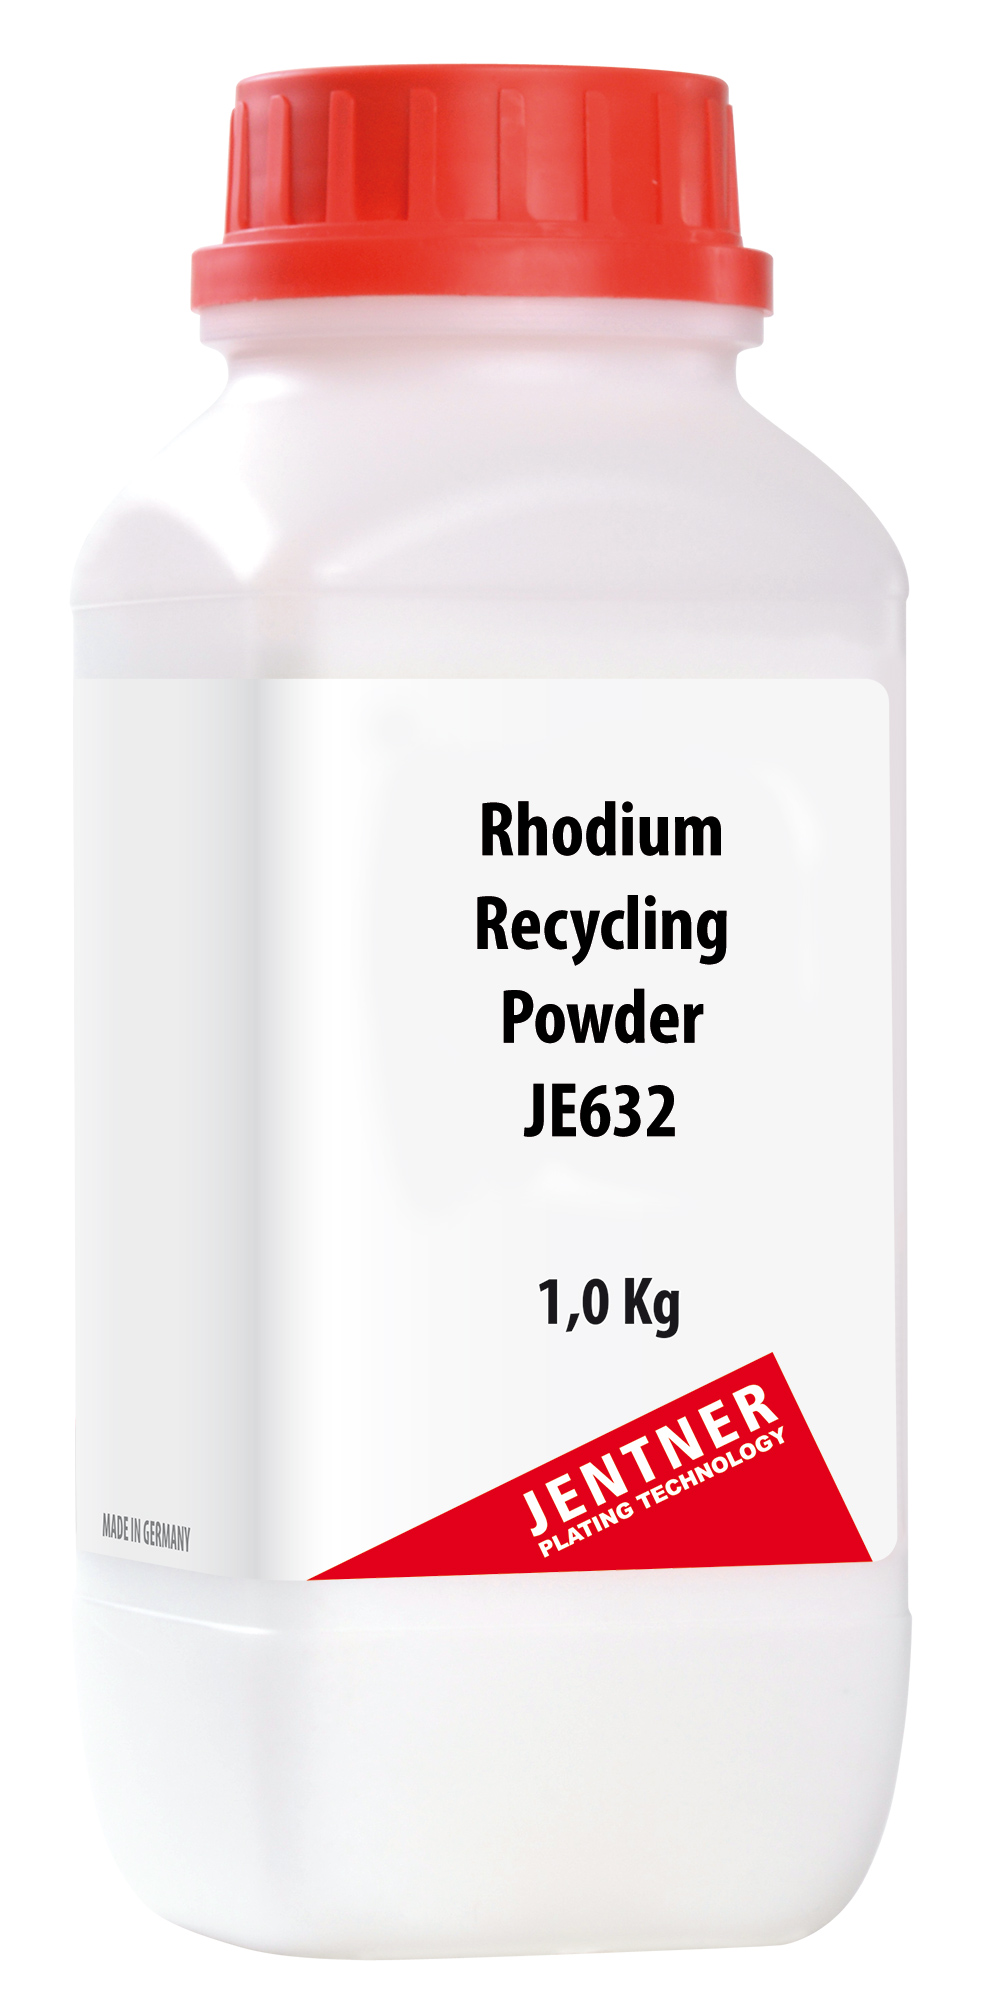 Rhodium-Recycling-Powder JE632